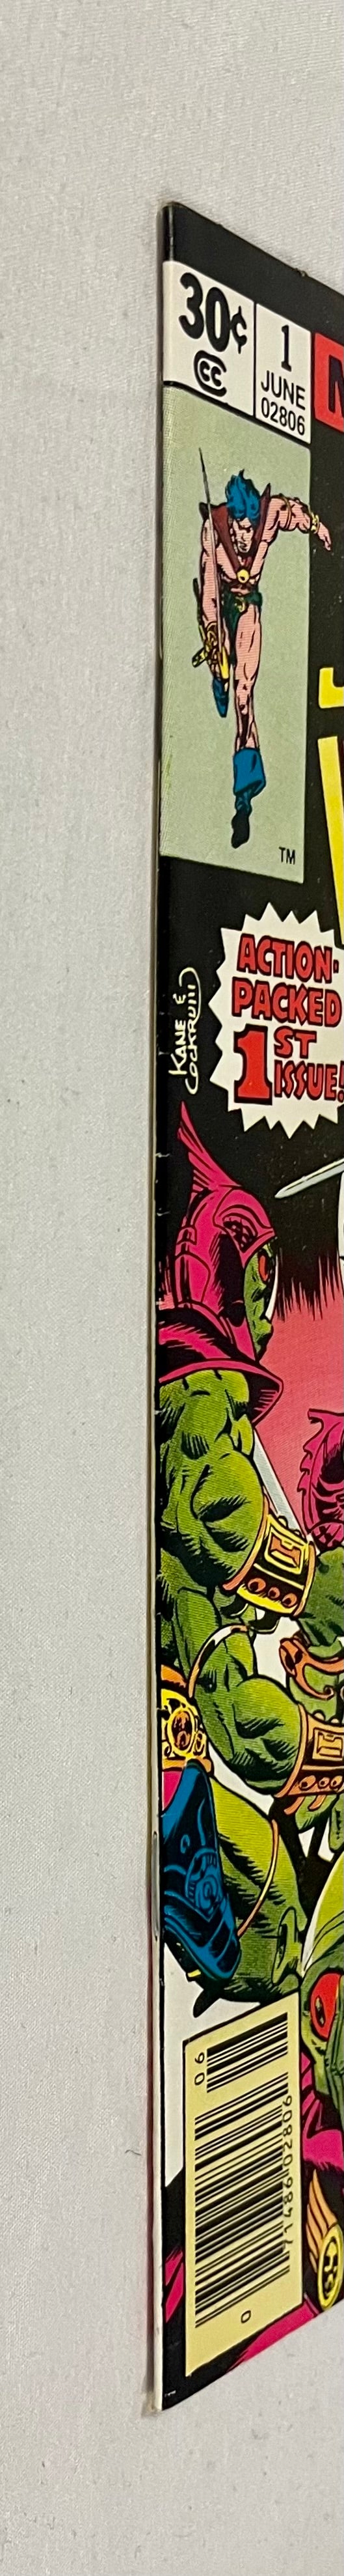 Marvel Comics John Carter, Warlord of Mars #1